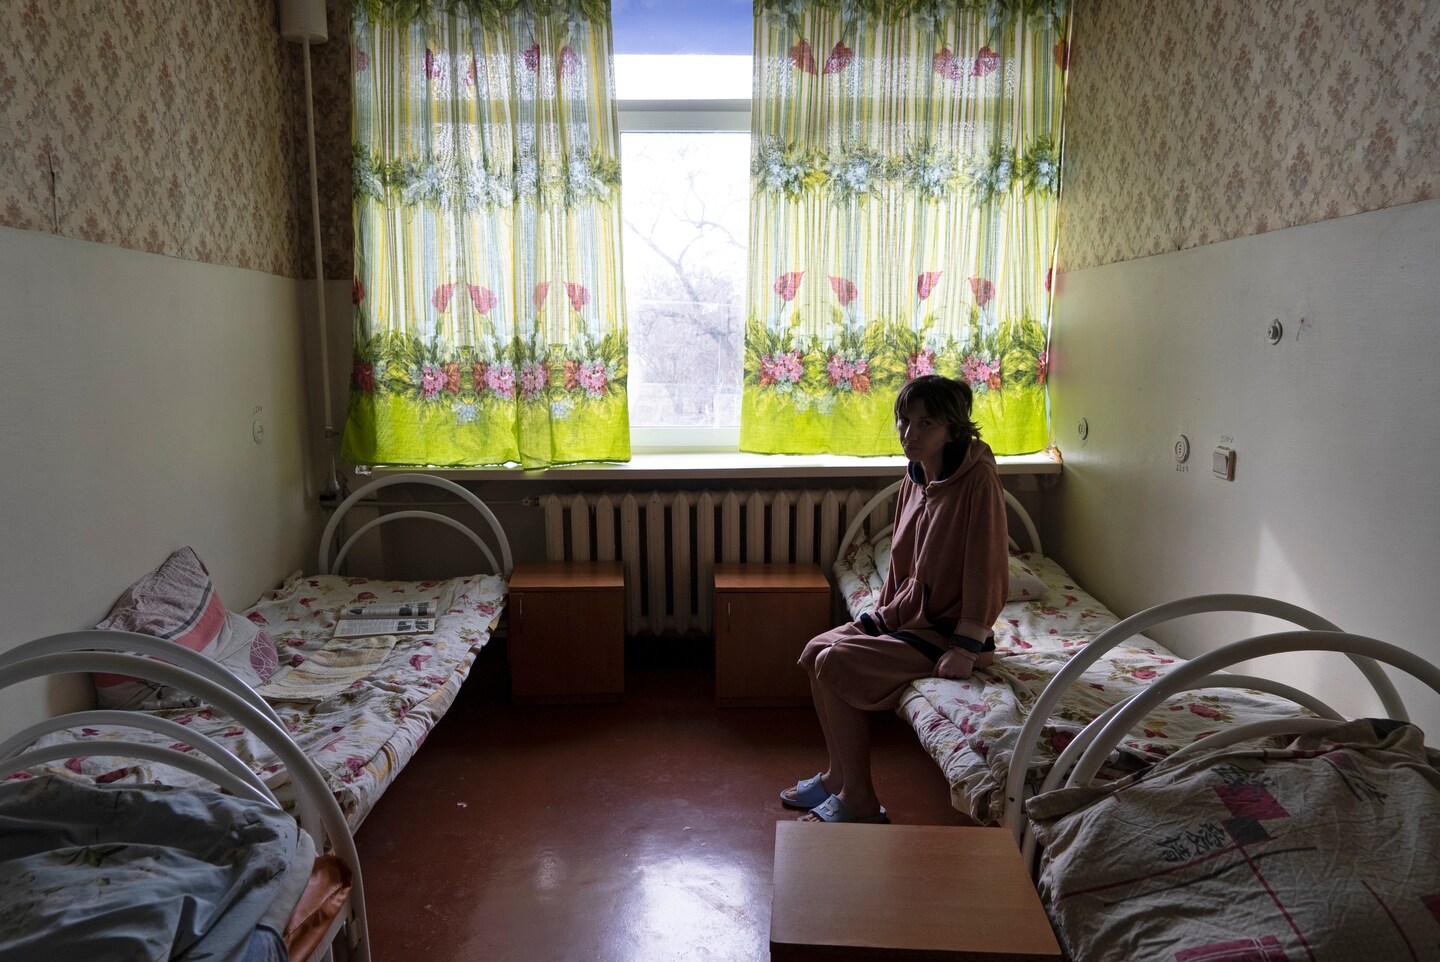 As Ukraine War Drags On, Civilian Mental Health Needs Rise